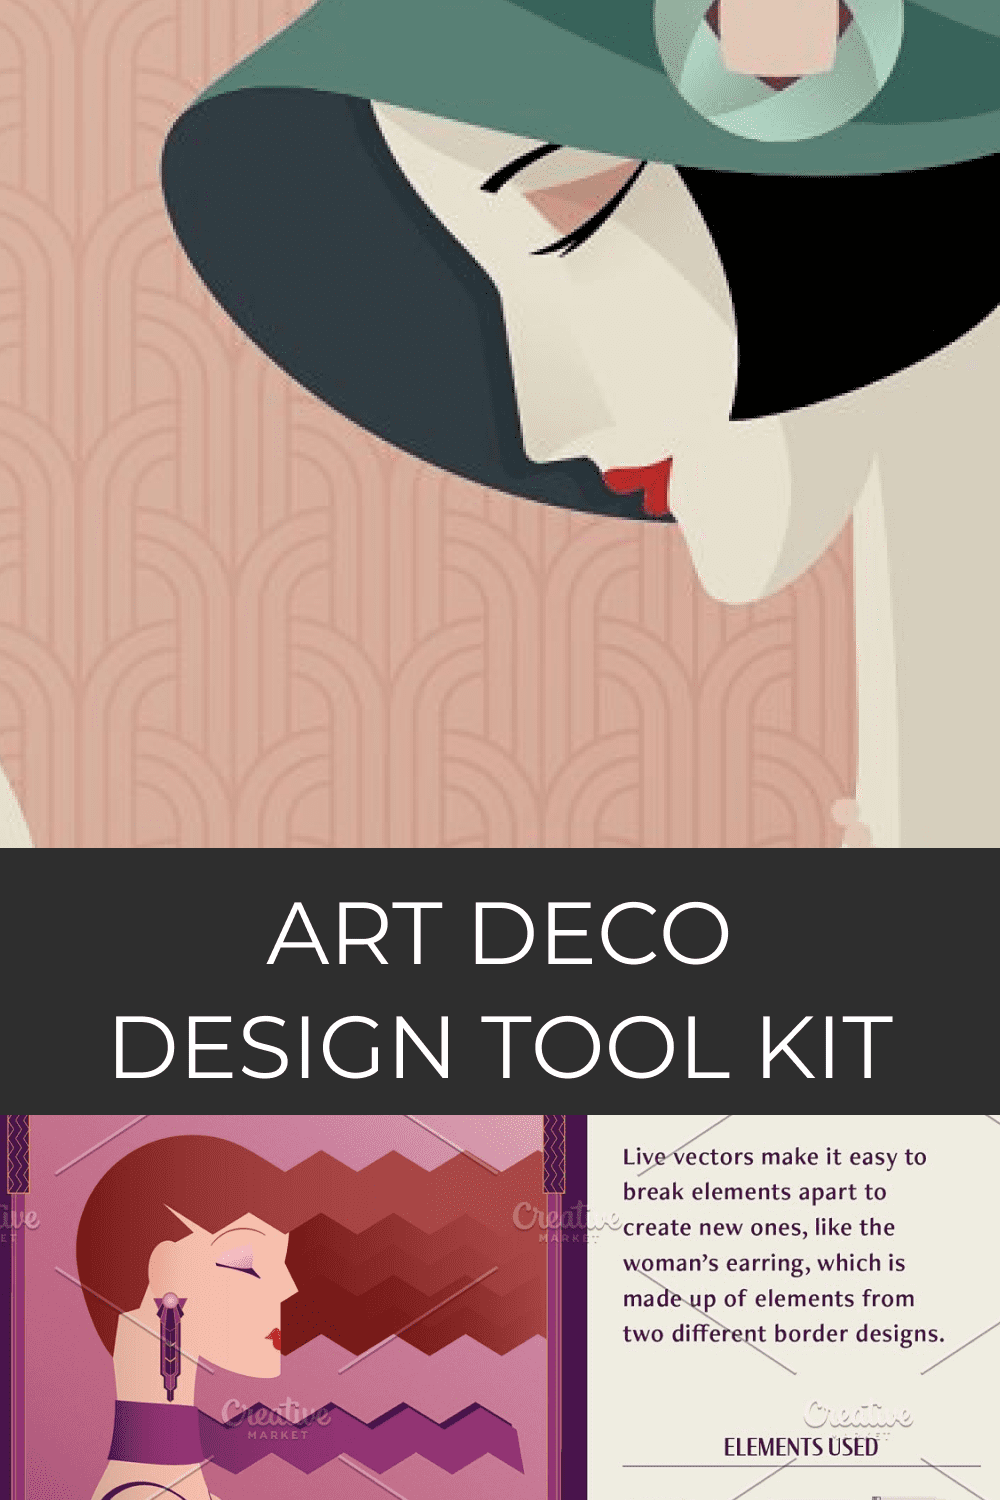 art deco design tool kit pinterest image.